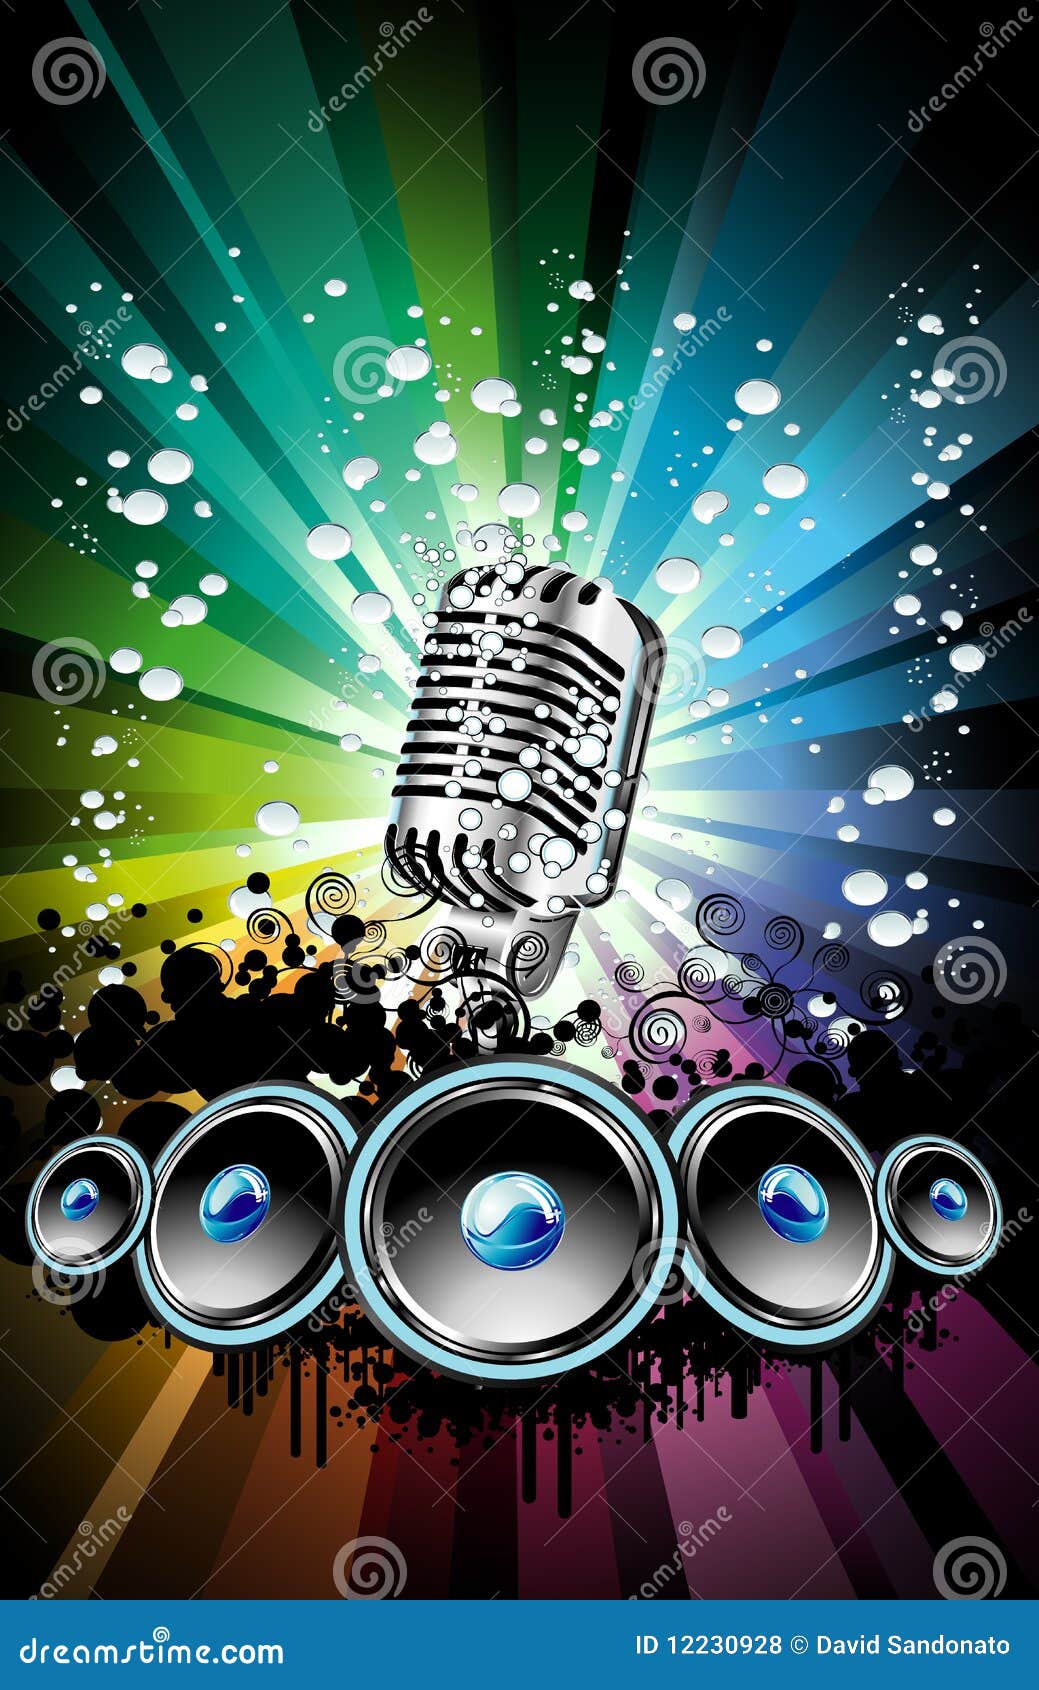 Background For Disco Event Flyer Stock Illustration Illustration Of Music Leisure